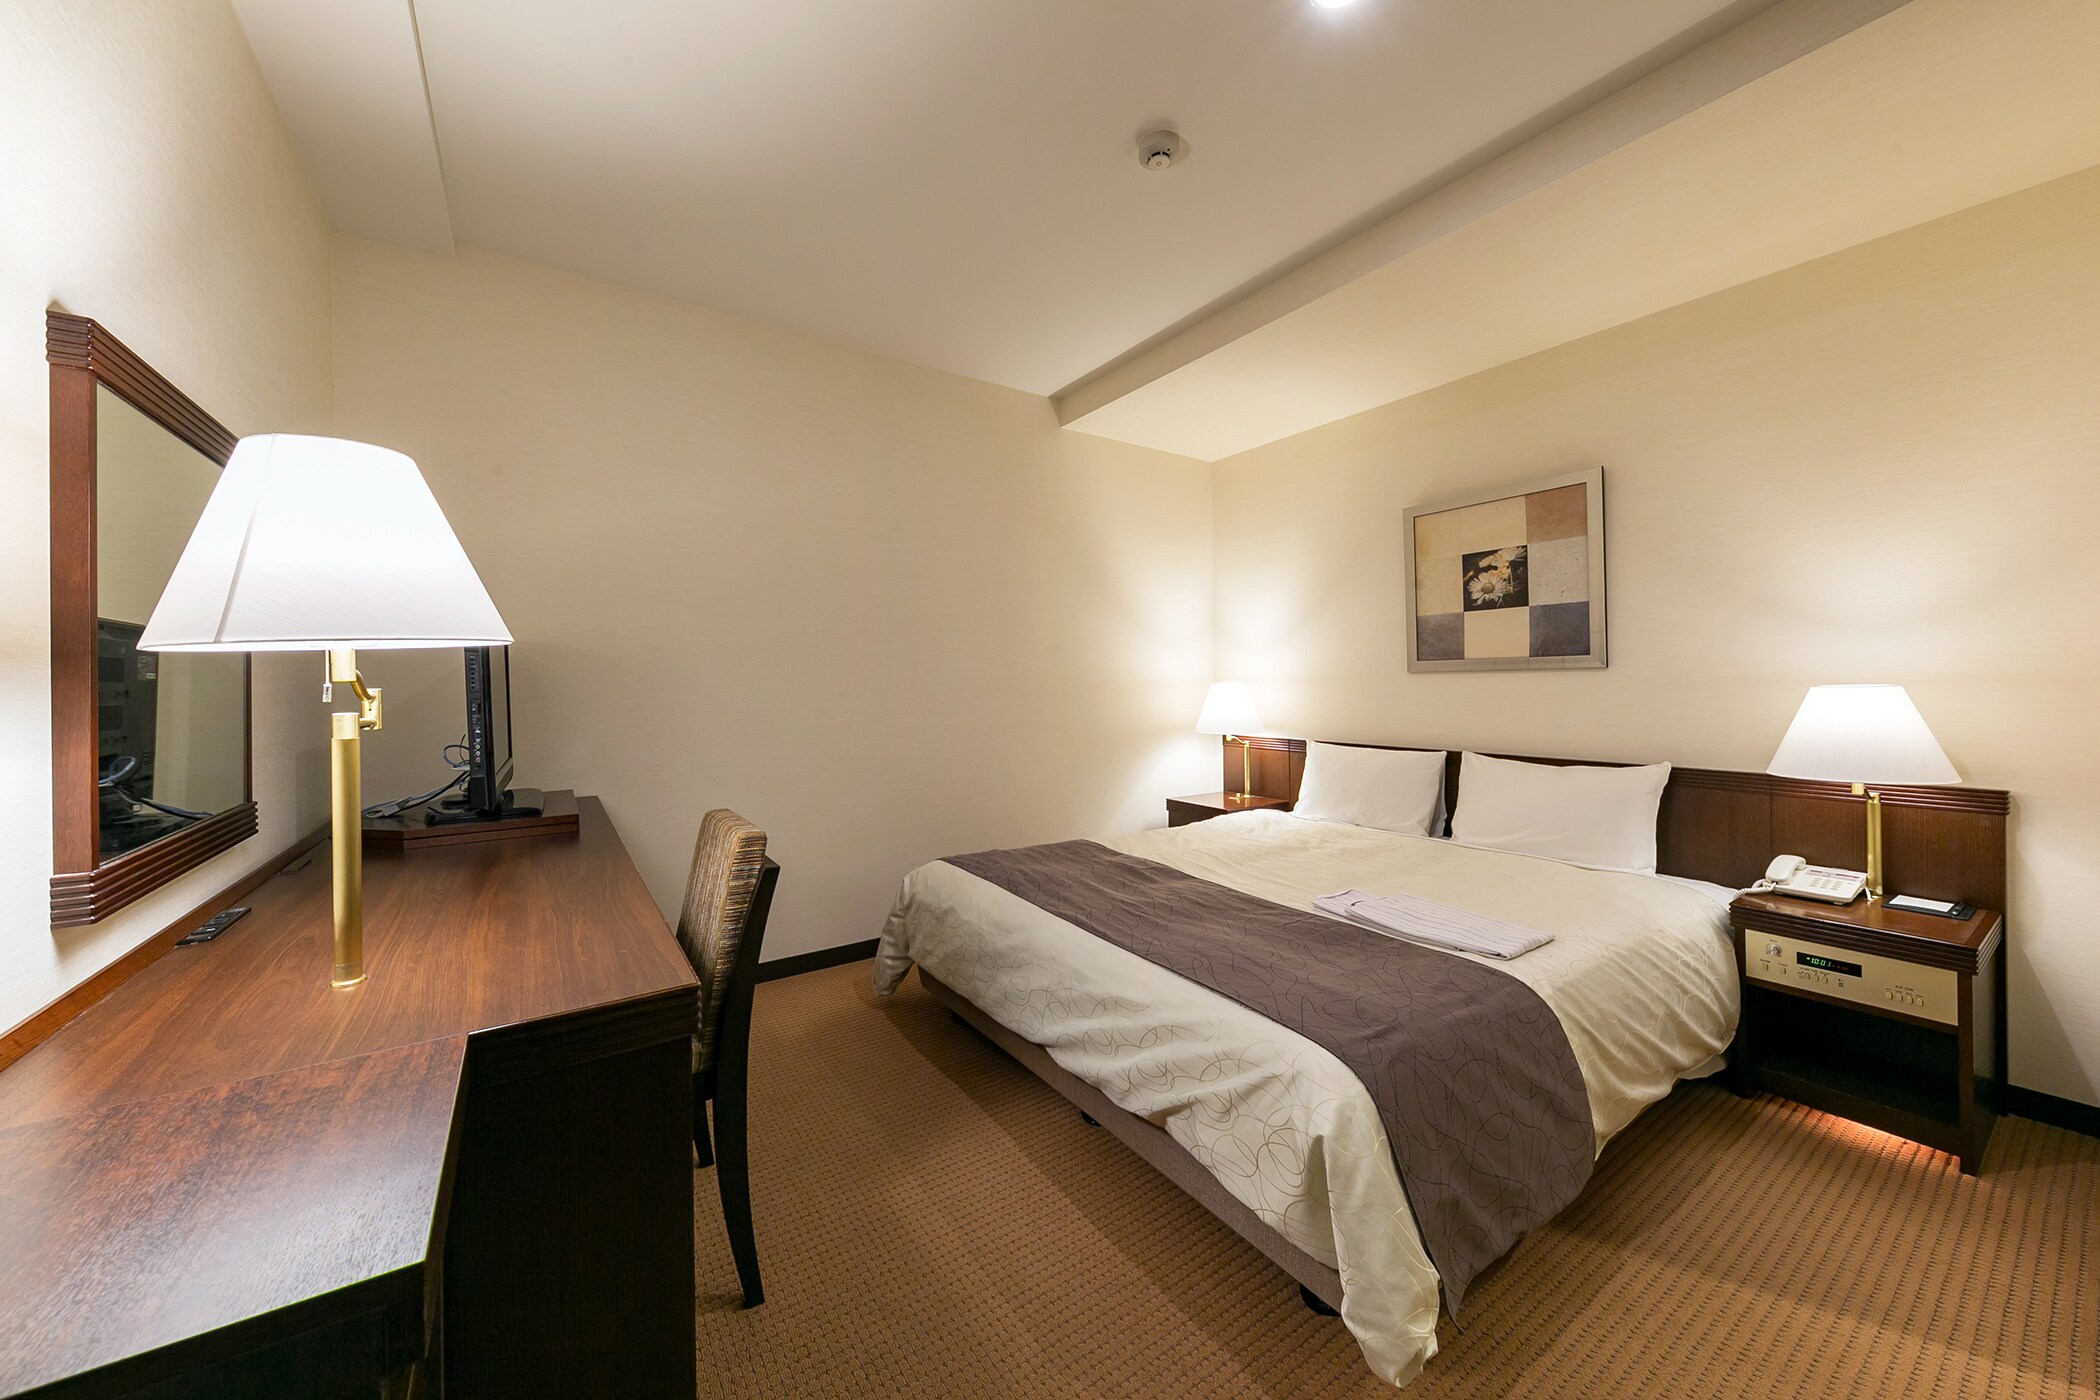 Contoh kamar double tempat tidur queen size 20,7 meter persegi / 160 cm